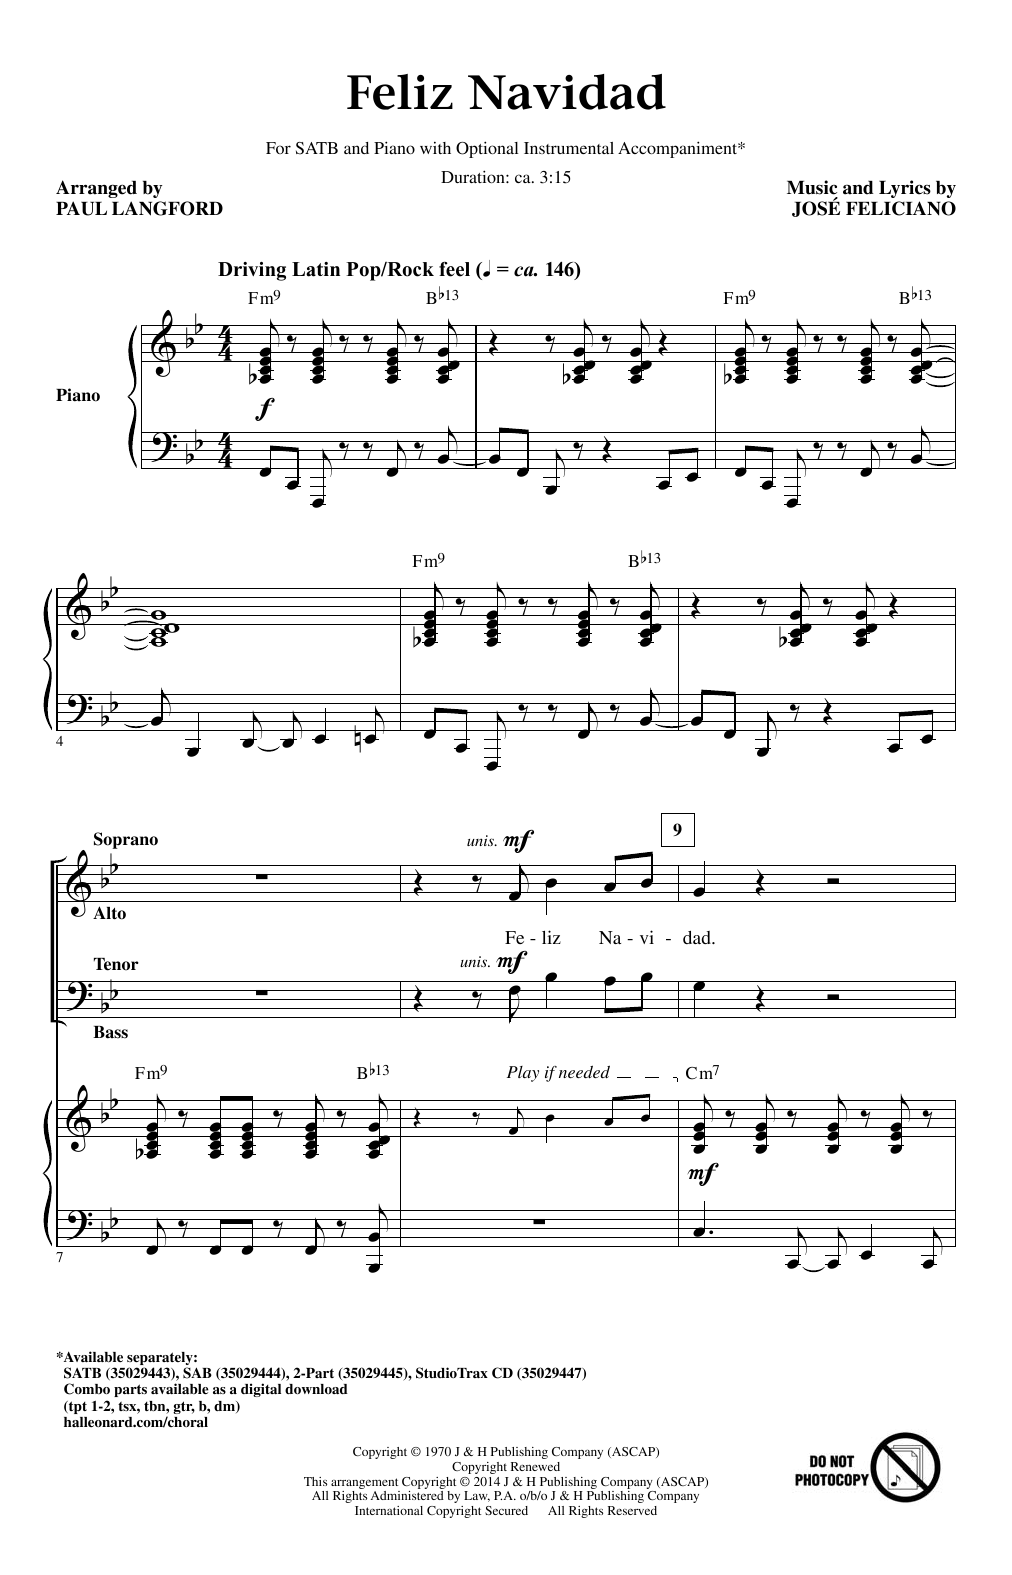 Download Jose Feliciano Feliz Navidad (arr. Paul Langford) Sheet Music and learn how to play SATB Choir PDF digital score in minutes